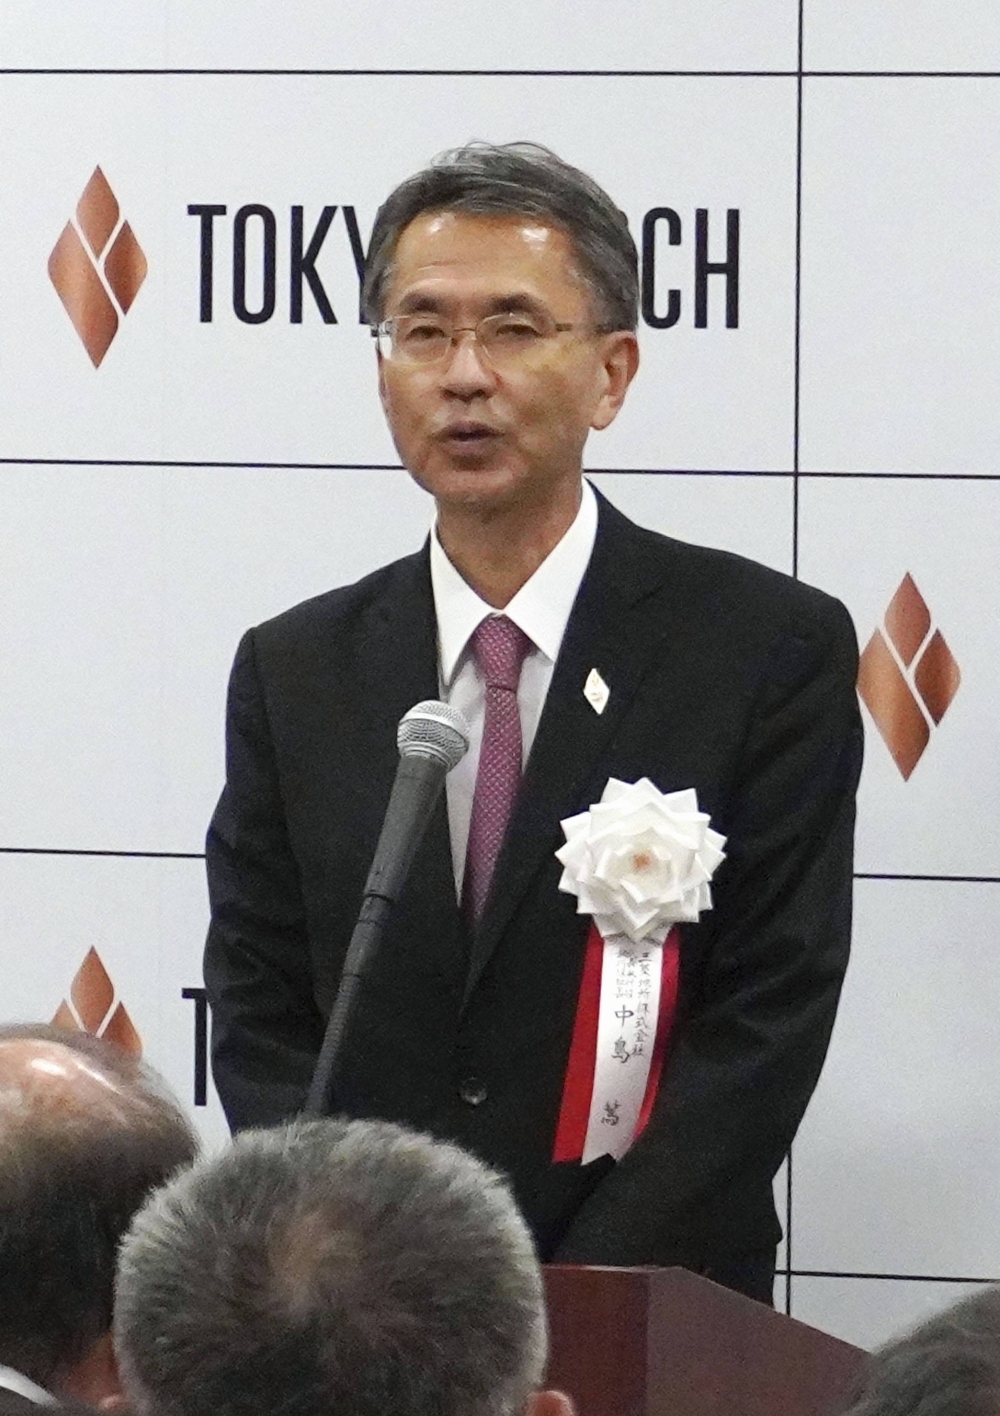 Mitsubishi Estate President Atsushi Nakajima speaks at a groundbreaking ceremony for Torch Tower in Tokyo on Wednesday. 